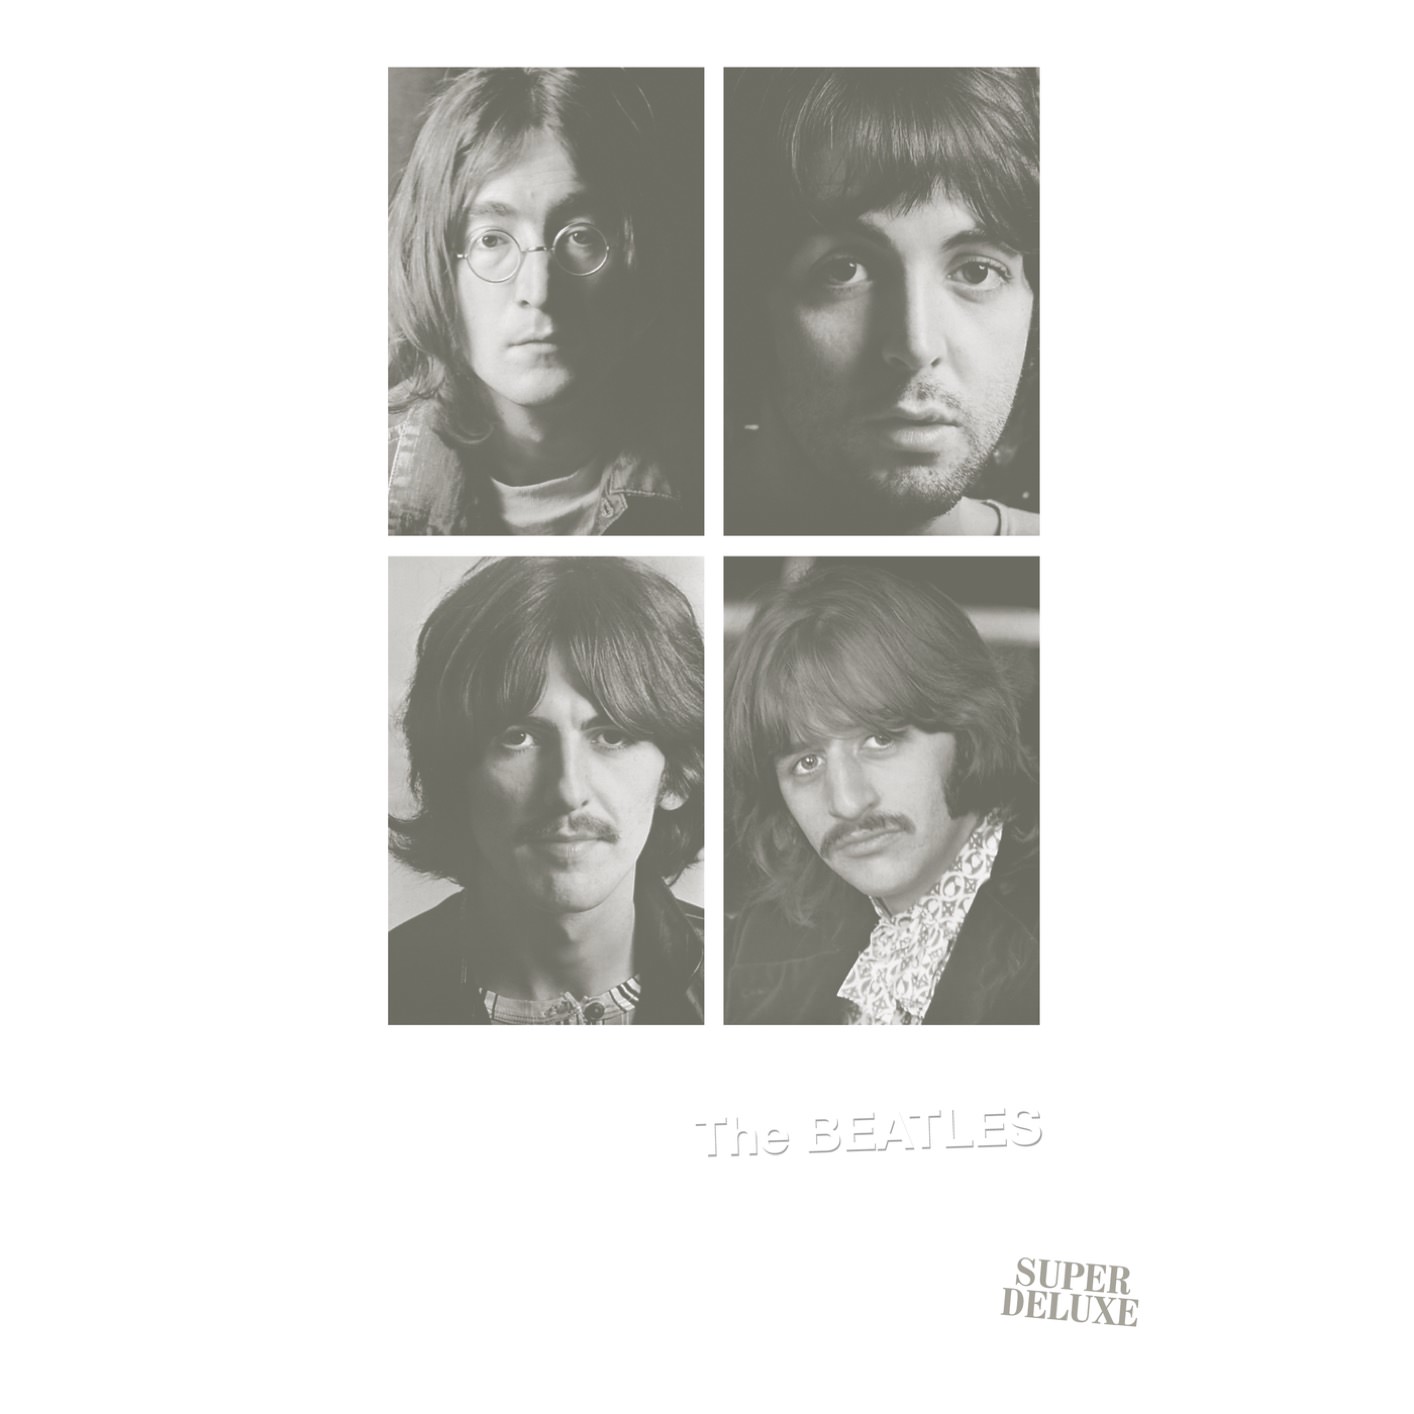 The Beatles - The Beatles (White Album) {Super Deluxe} (1968/2018) [FLAC 24bit/96kHz]